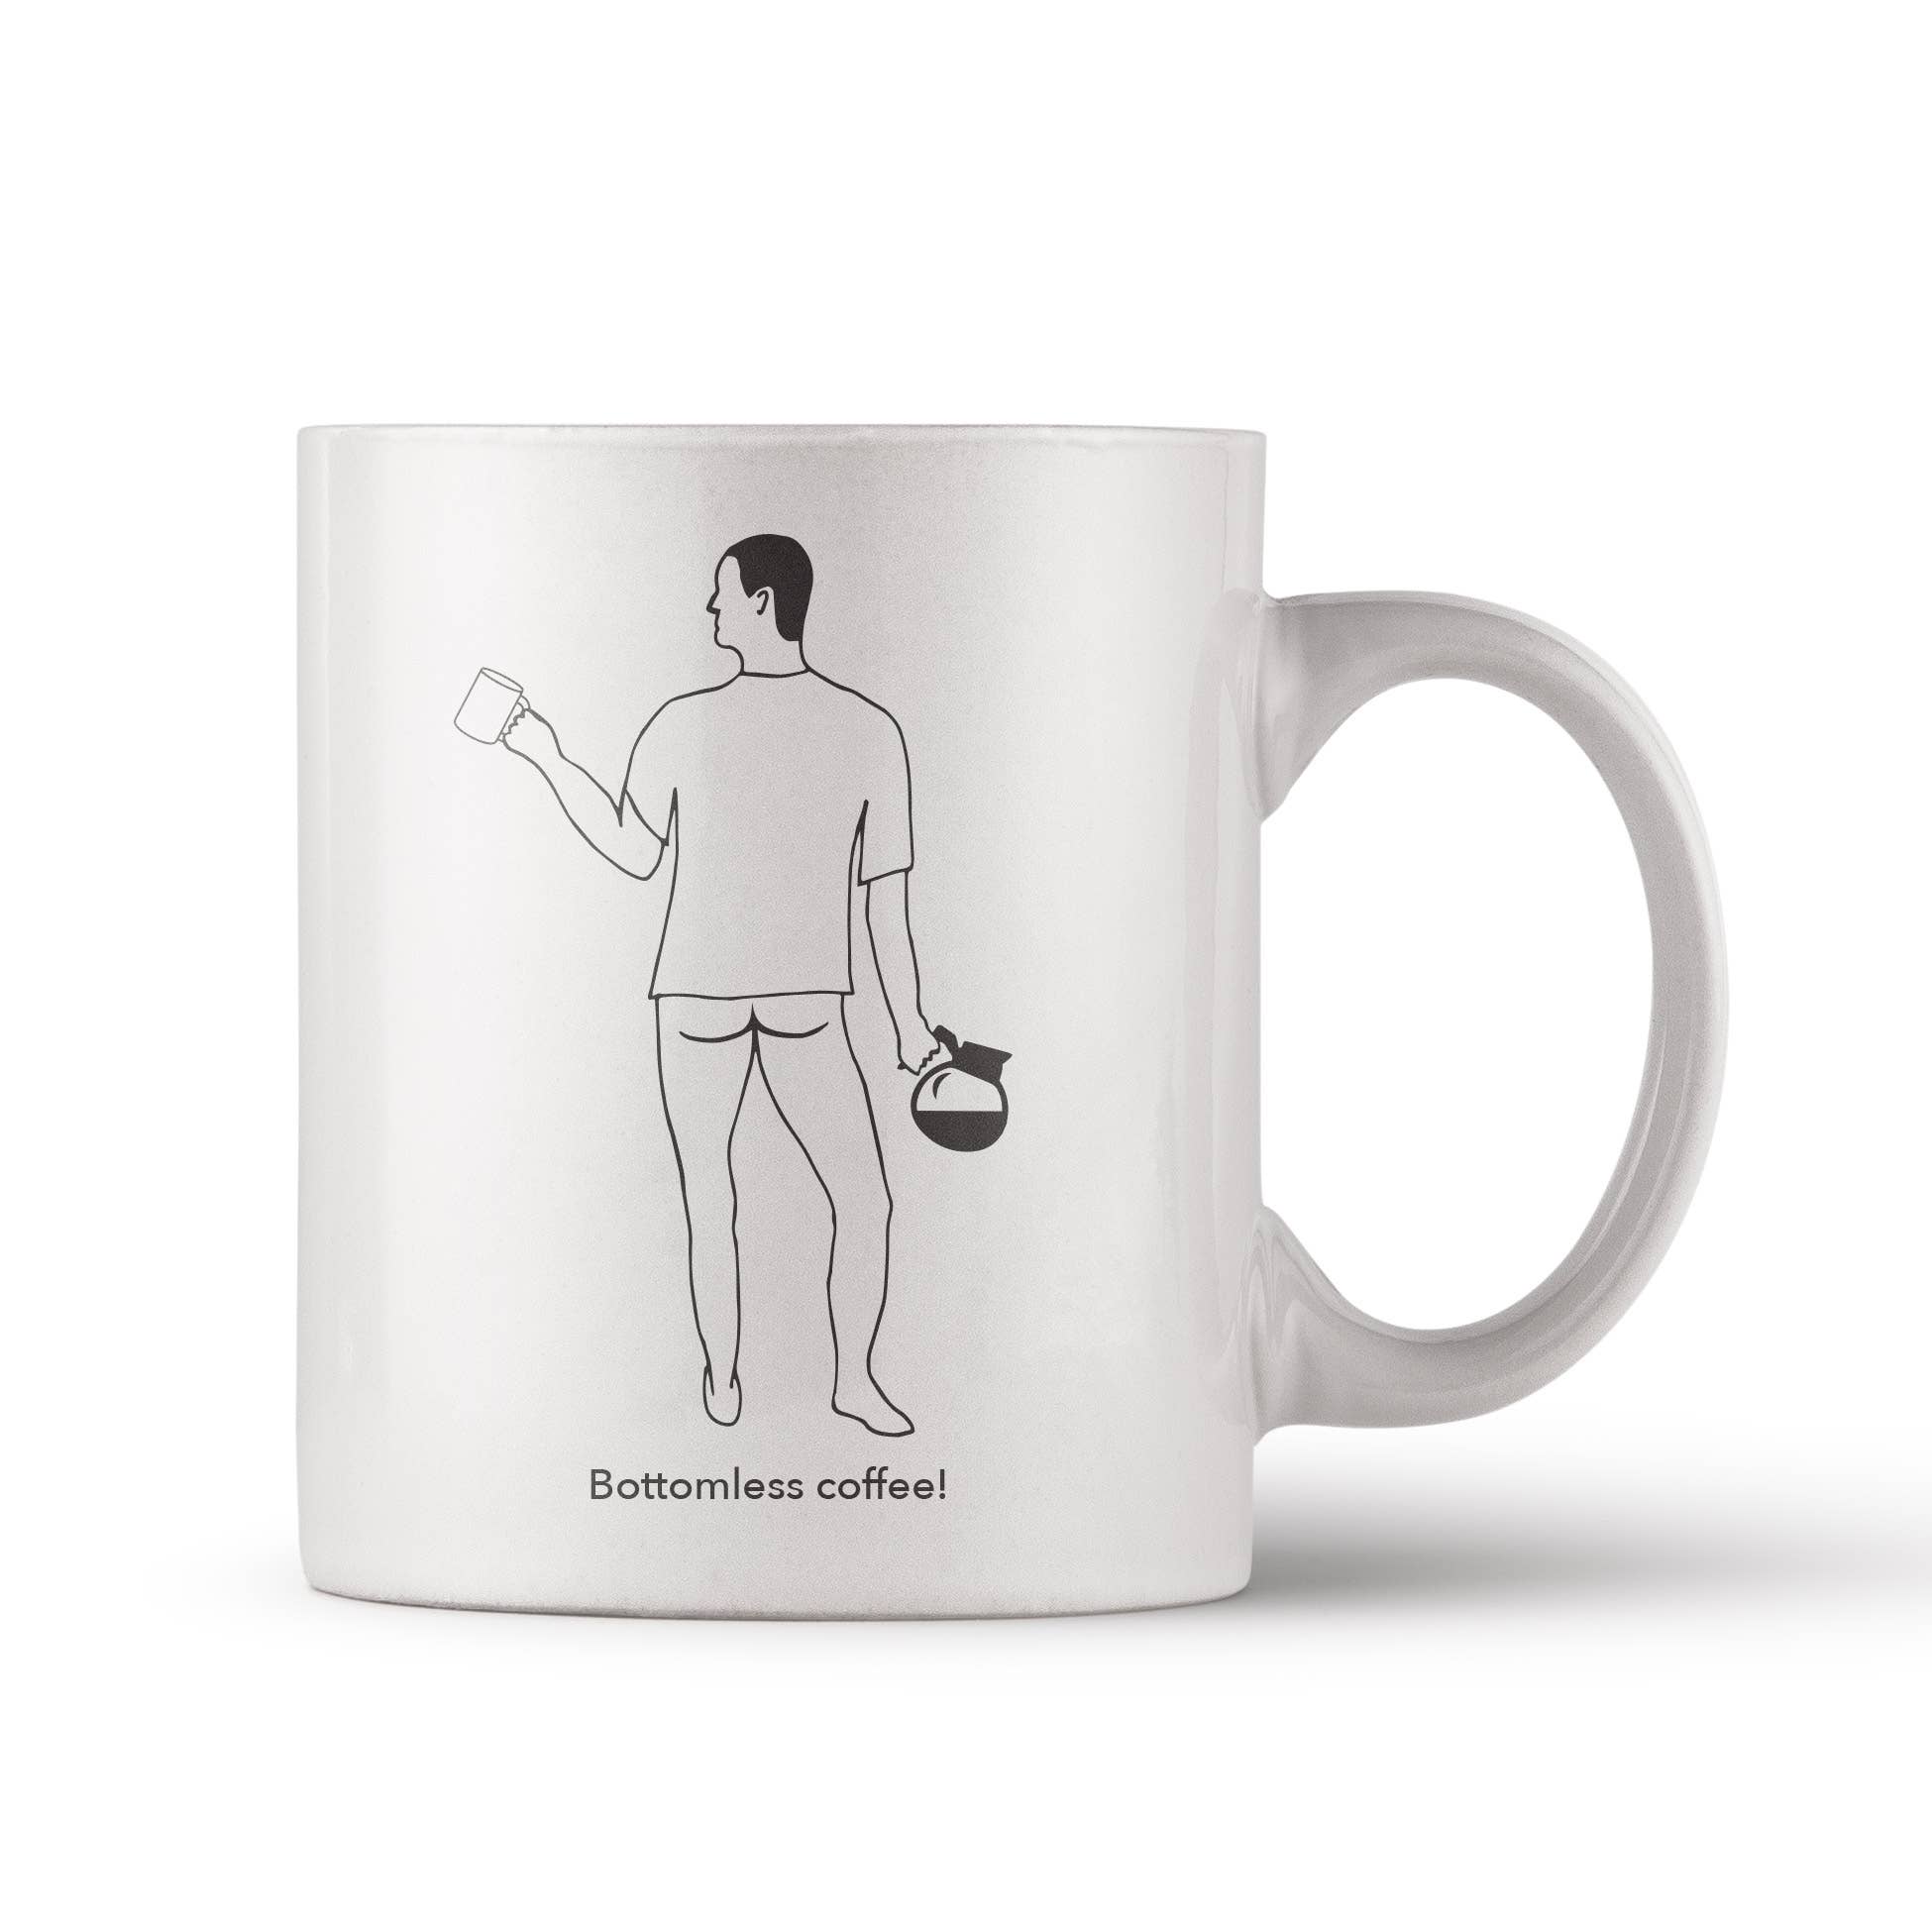 Pretty Alright Goods - Bottomless Coffee Mug